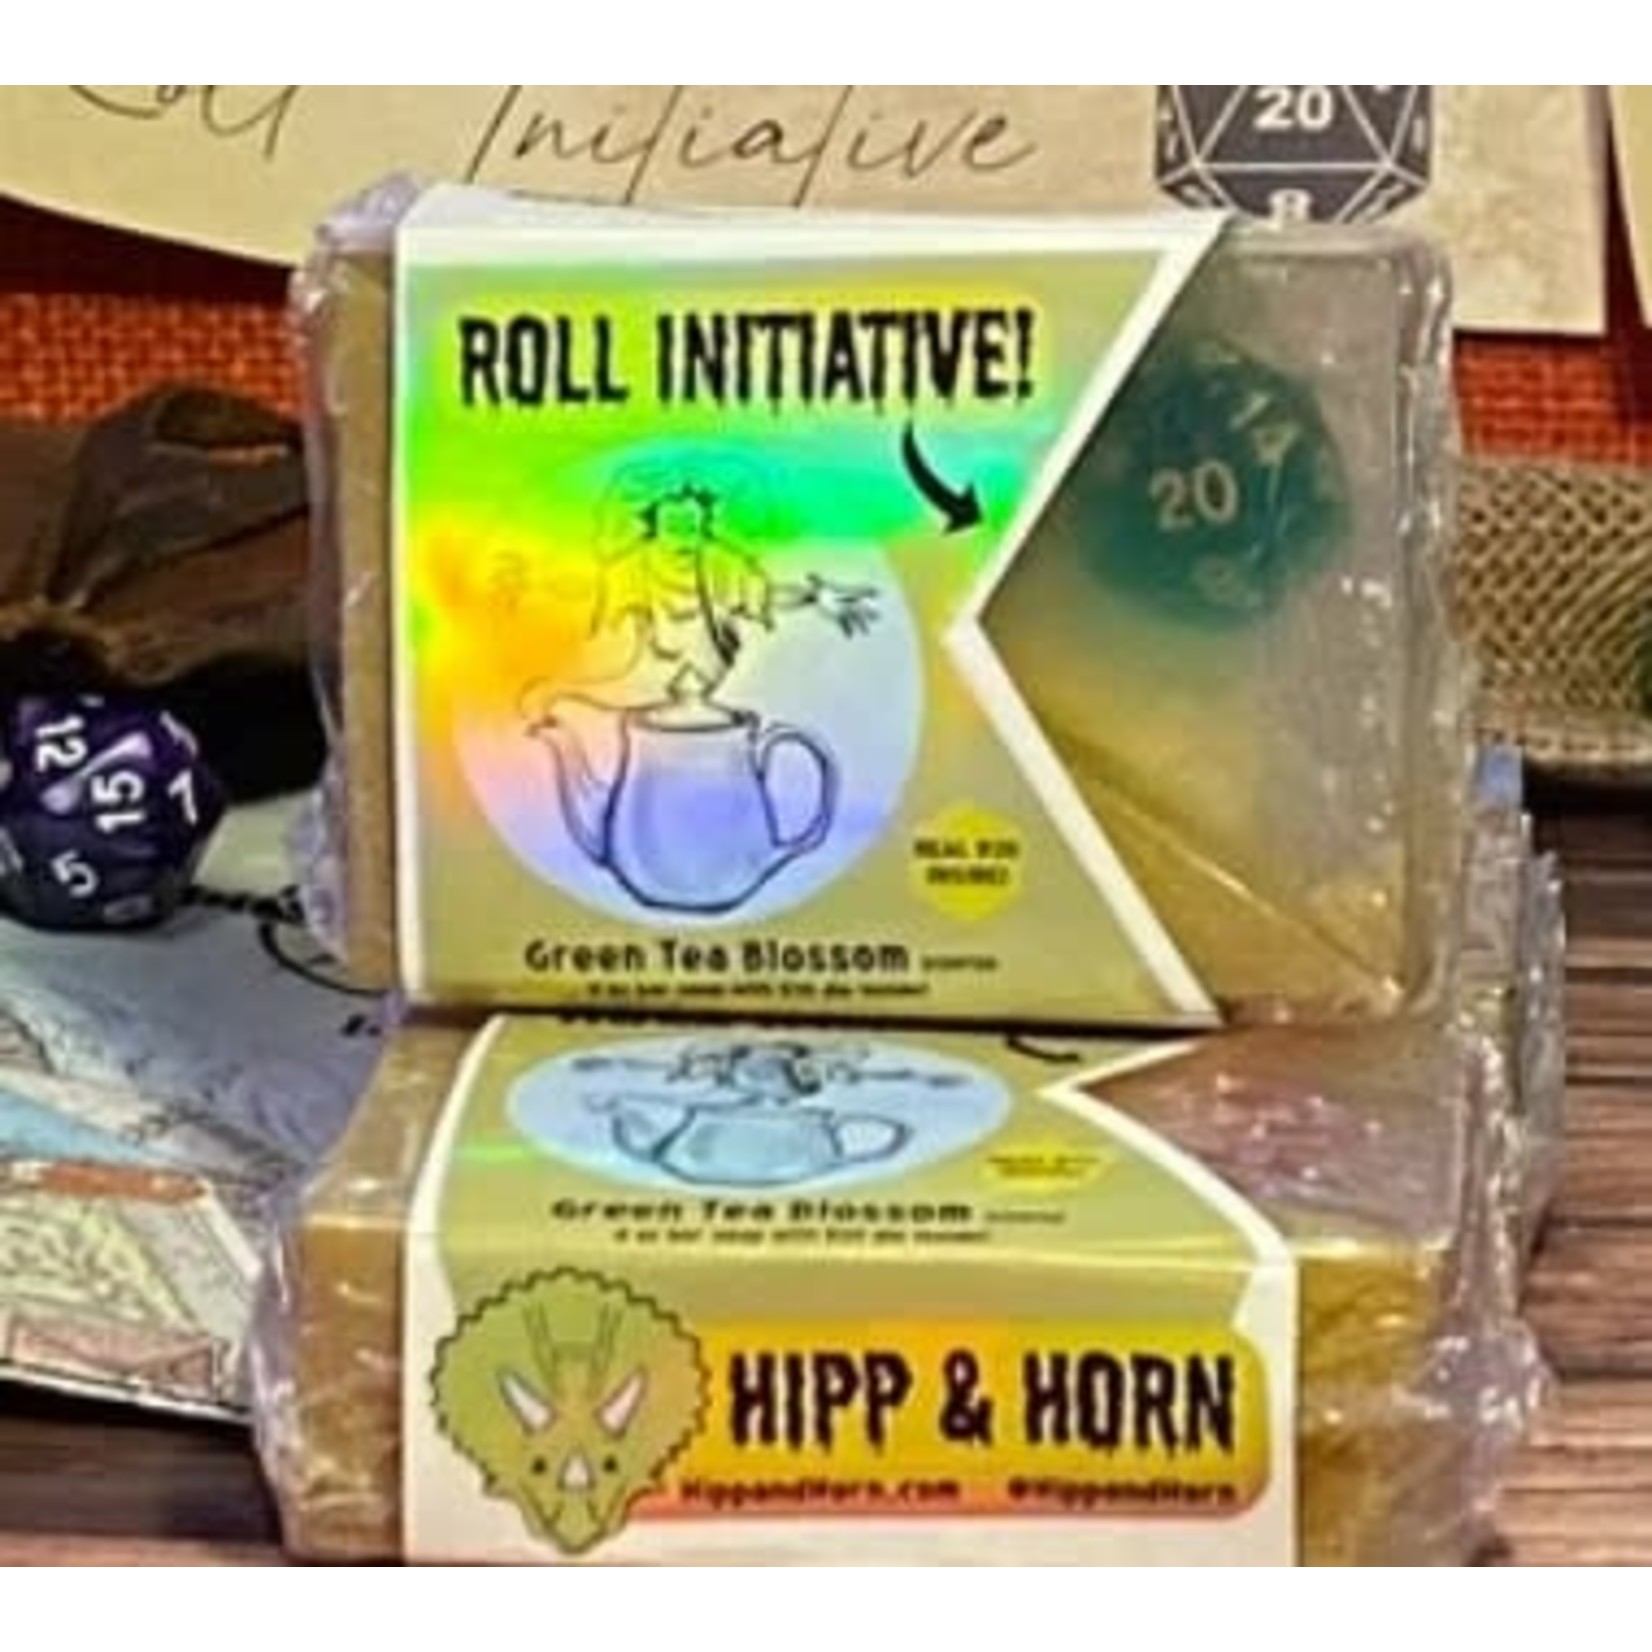 HippAndHorn Roll Initiative! Soap Bar with D20 Inside